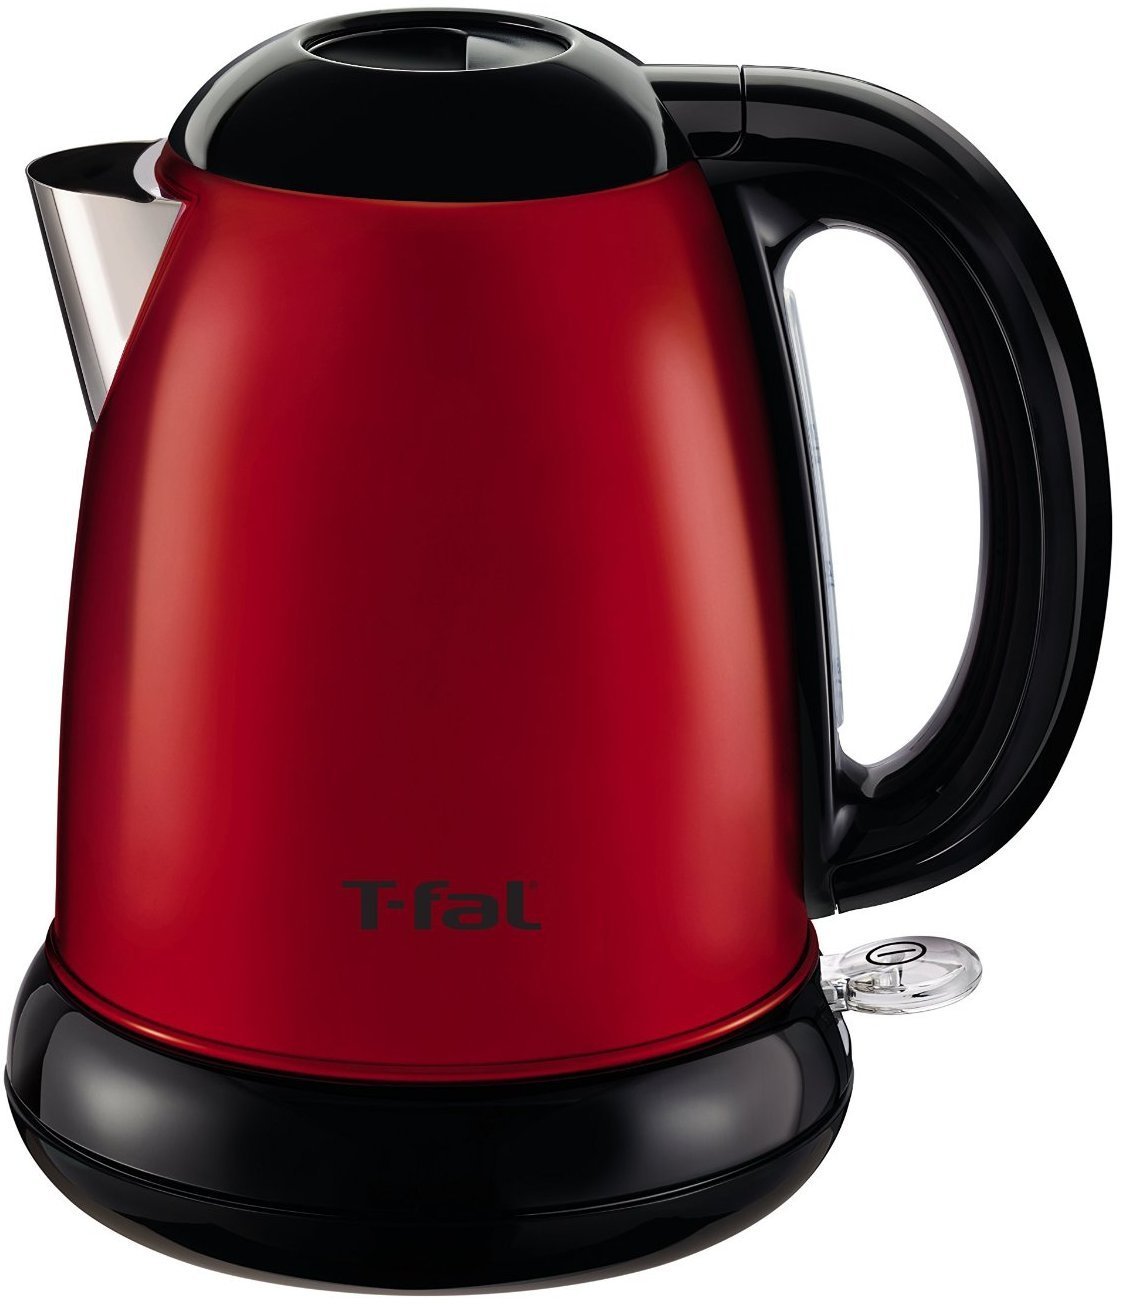 T-fal KI1605US Stainless Steel Electric Tea Kettle, 1.7 Liter